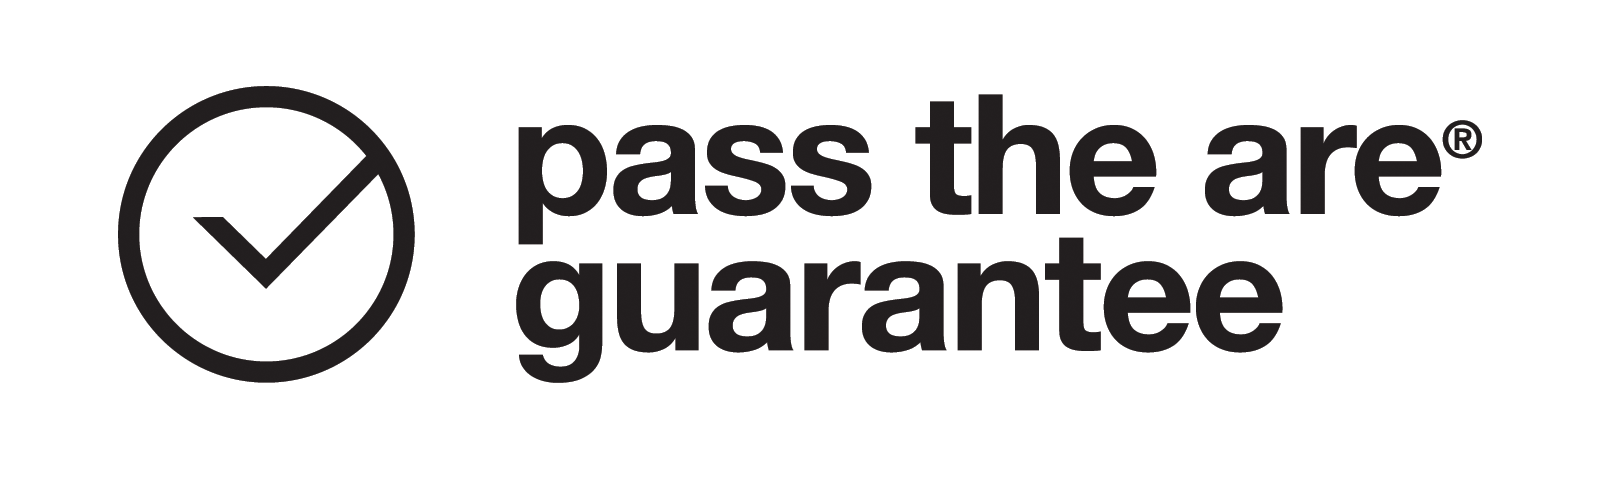 BKS_pass_ARE_guarantee_badge Black PNG